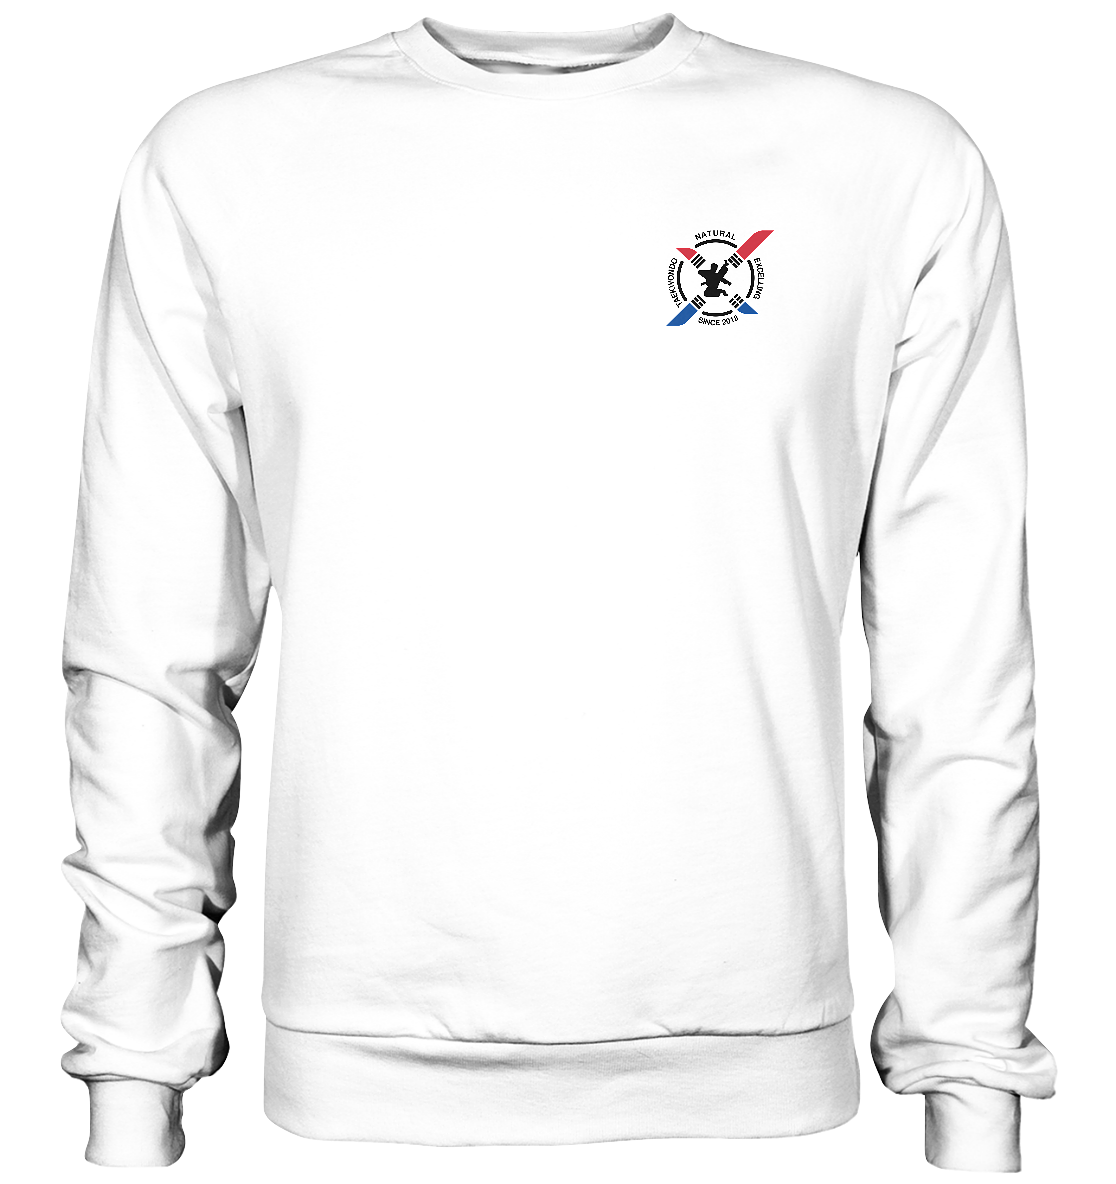 NEXT TAEKWONDO - Team NExT - Basic Sweatshirt